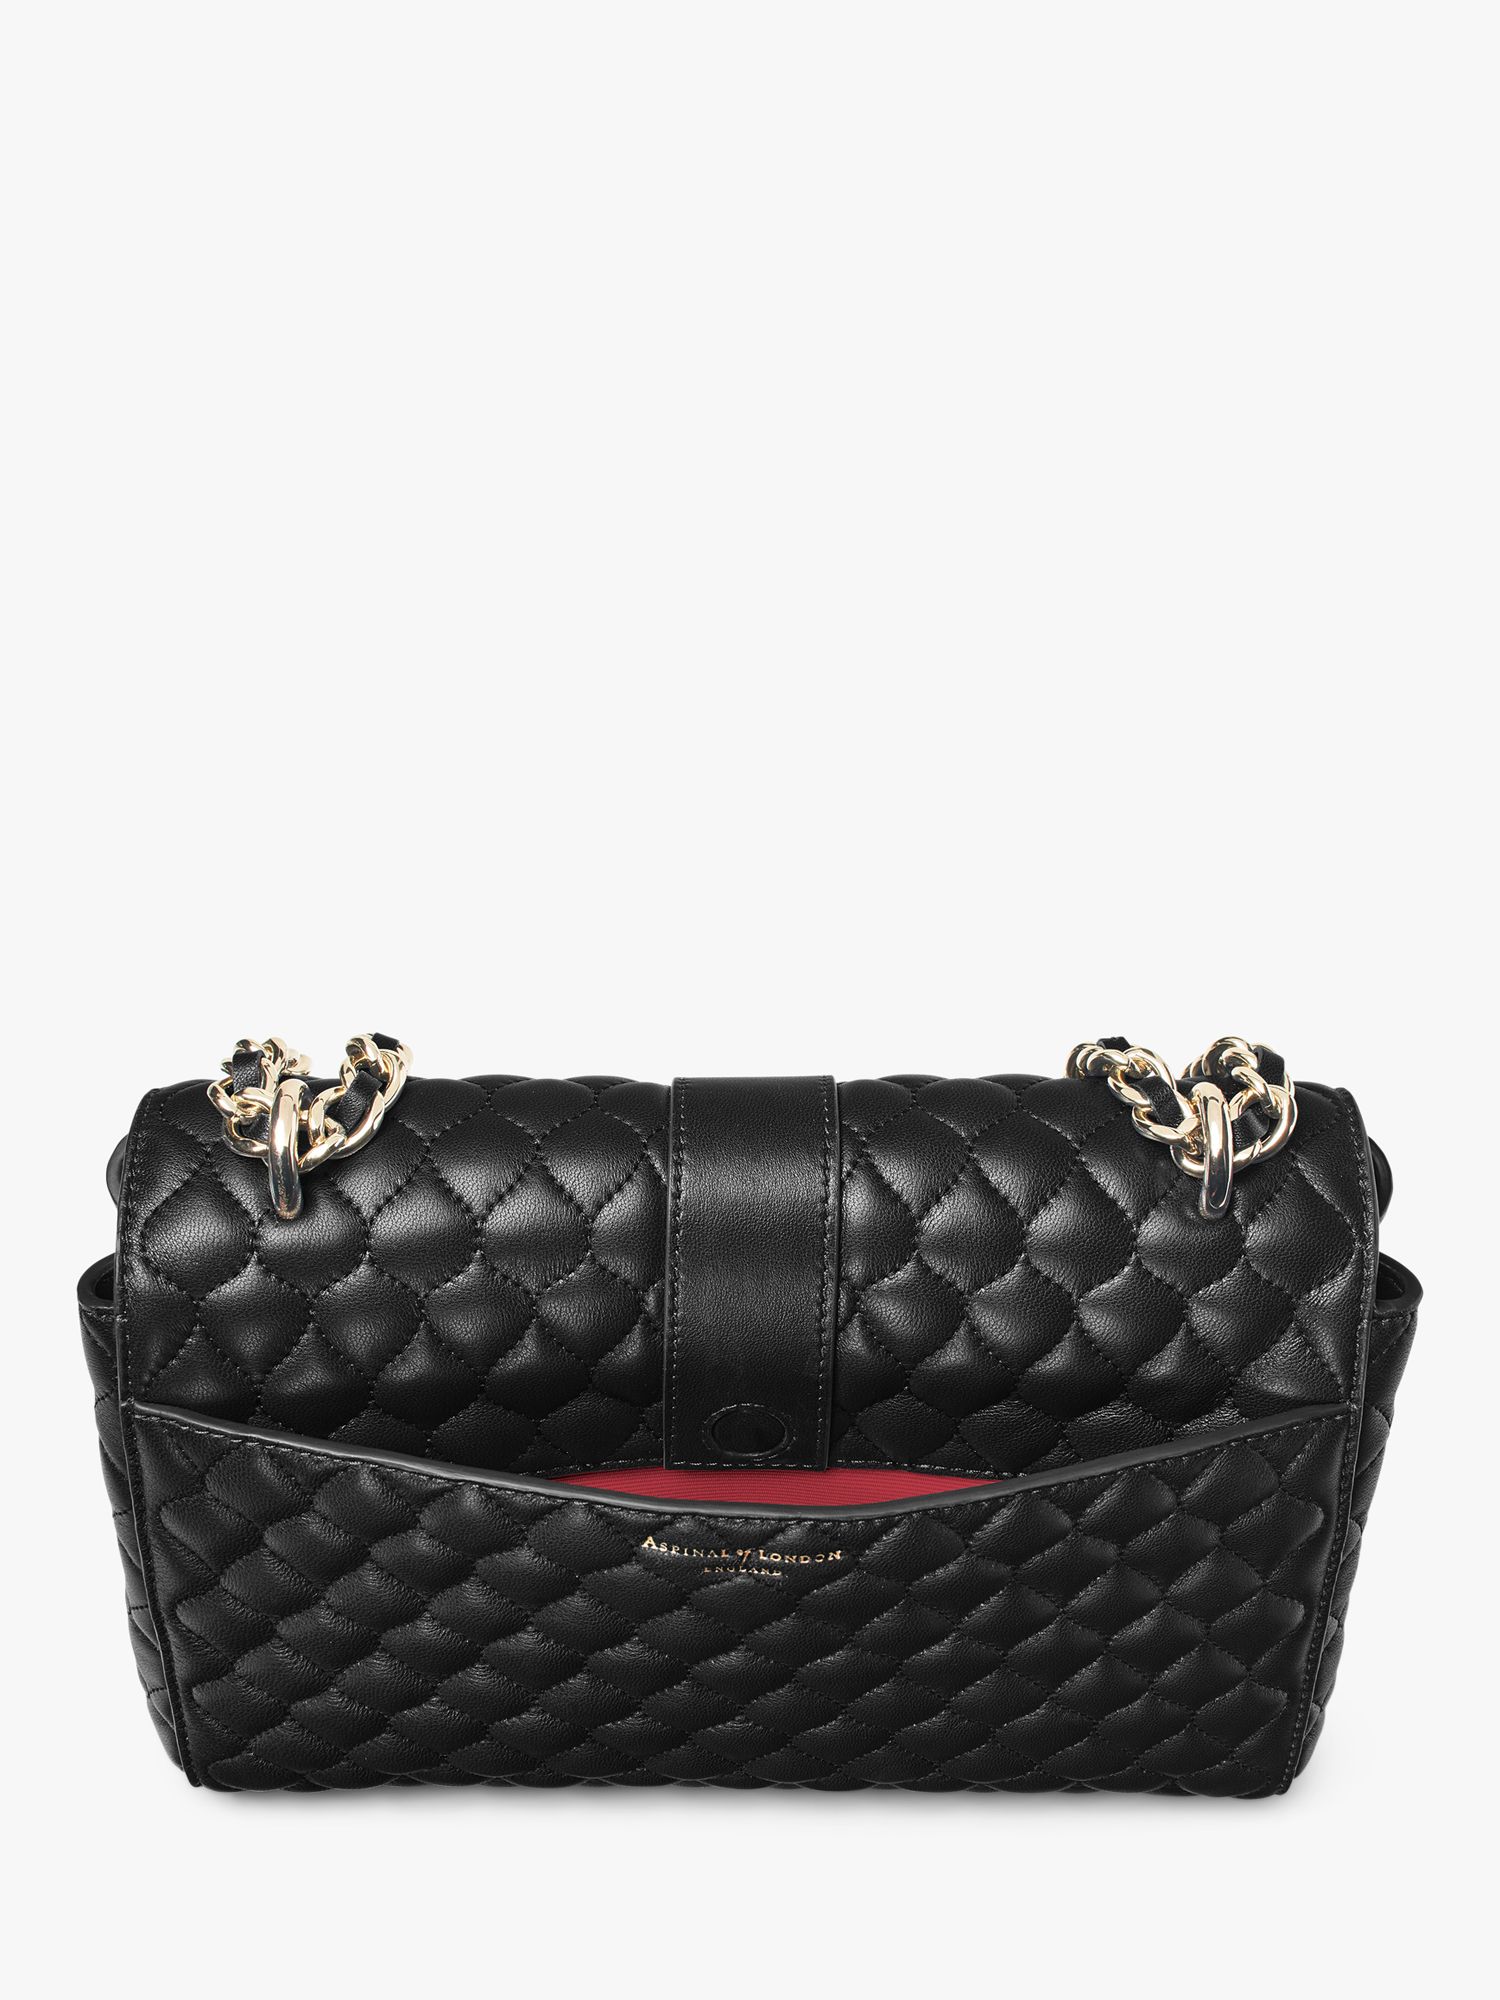 Aspinal of London Lottie Large Smooth Quilted Leather Shoulder Bag, Black